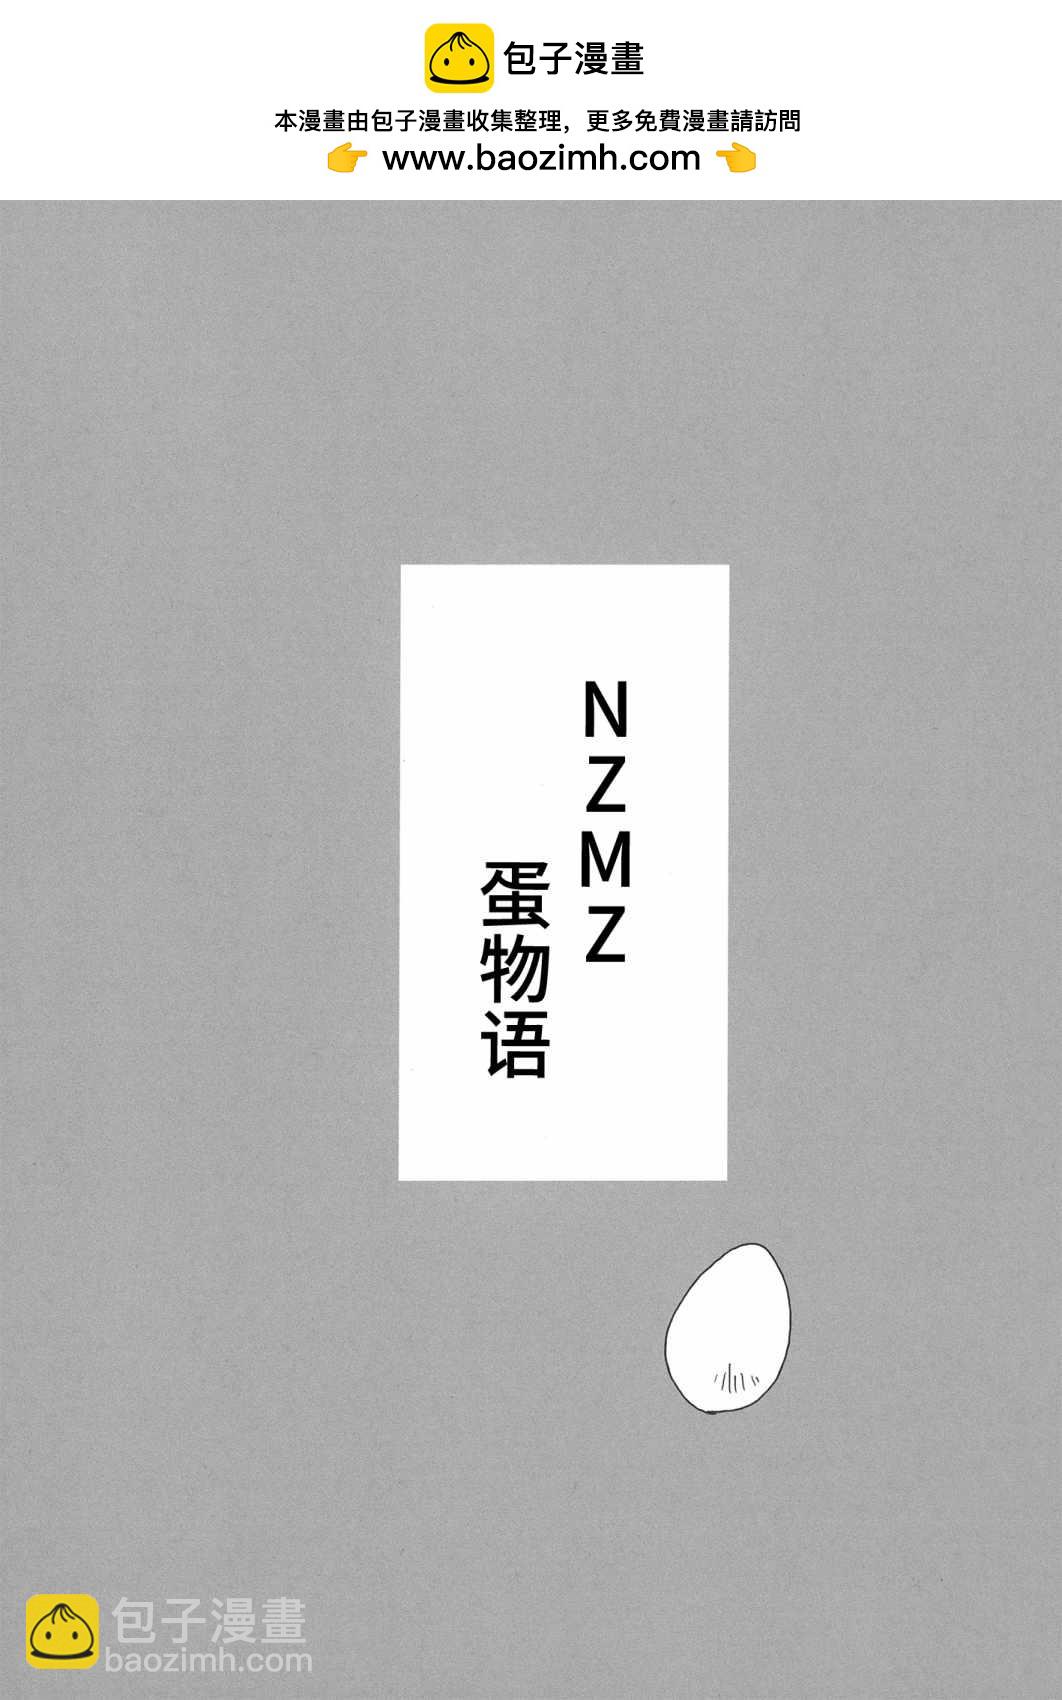 NZMZ蛋物語 - 短篇 - 2